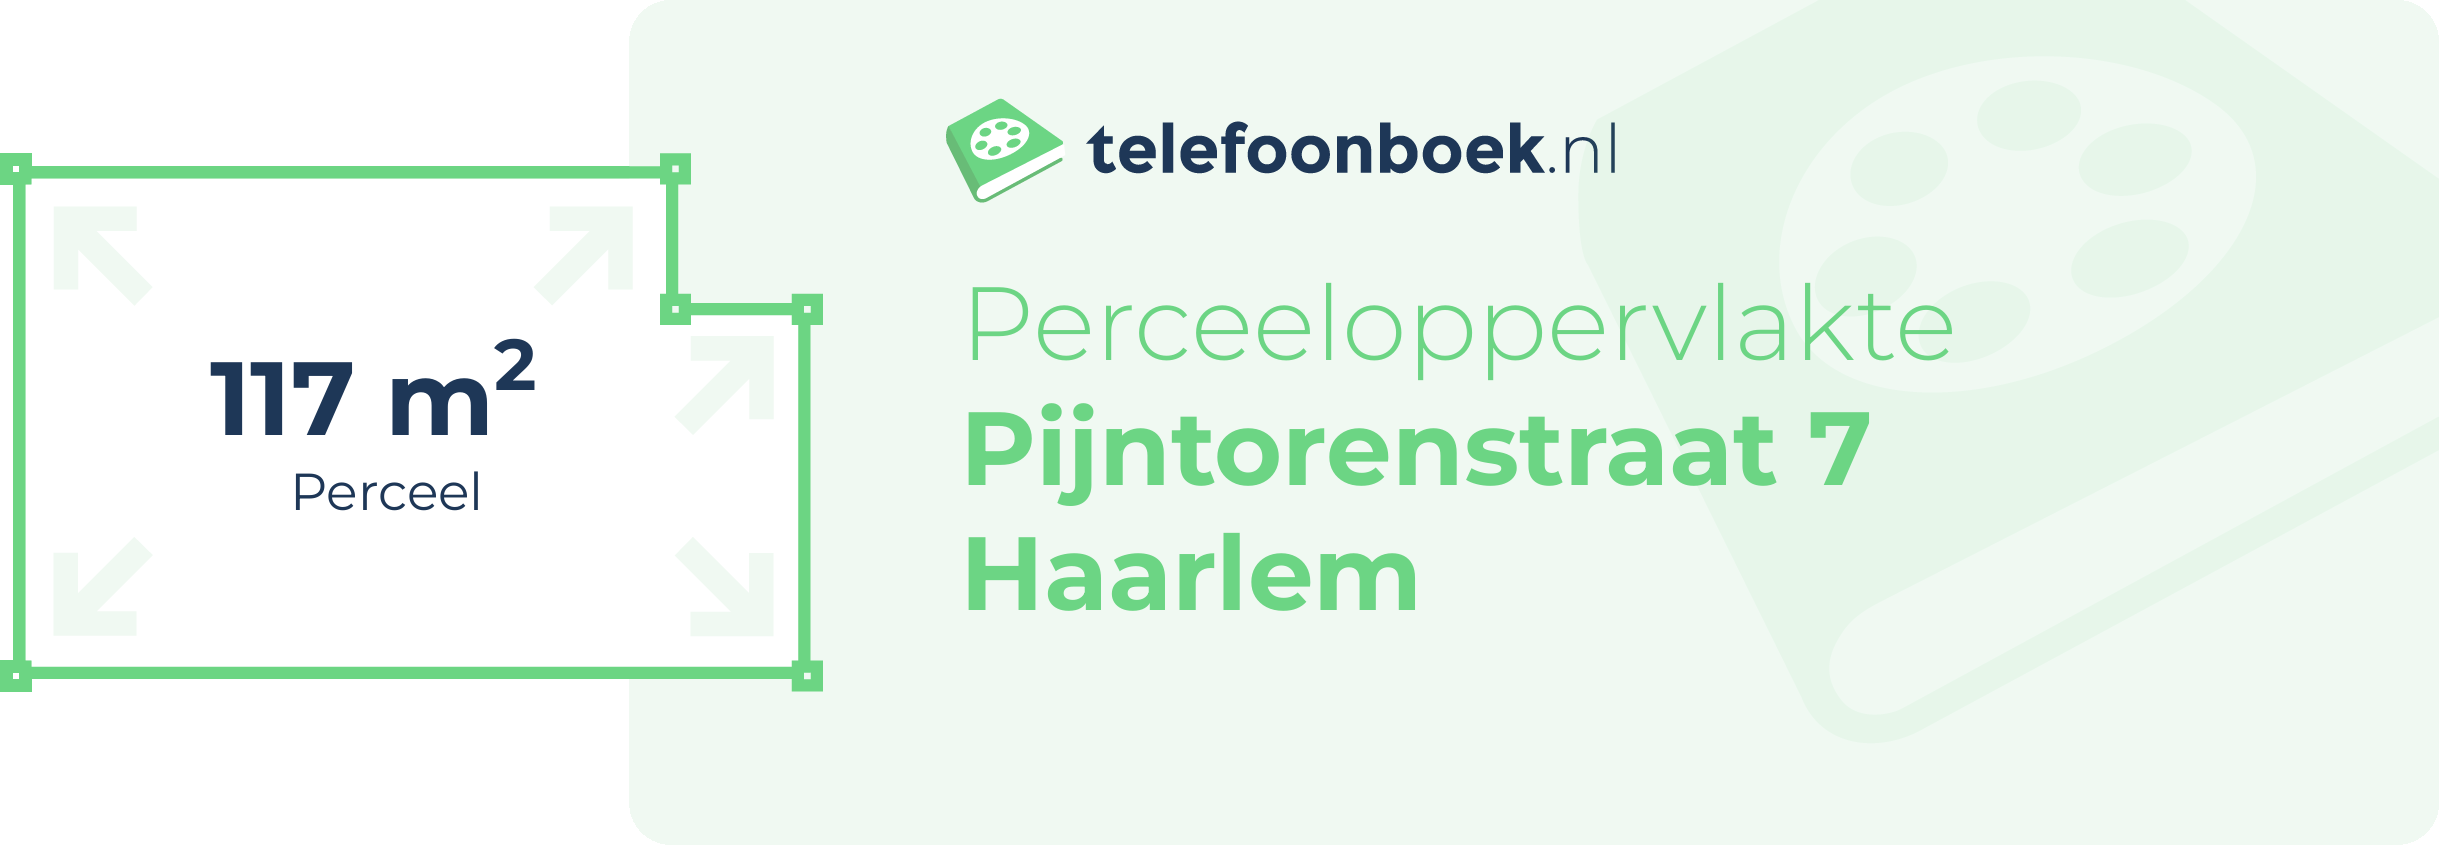 Perceeloppervlakte Pijntorenstraat 7 Haarlem